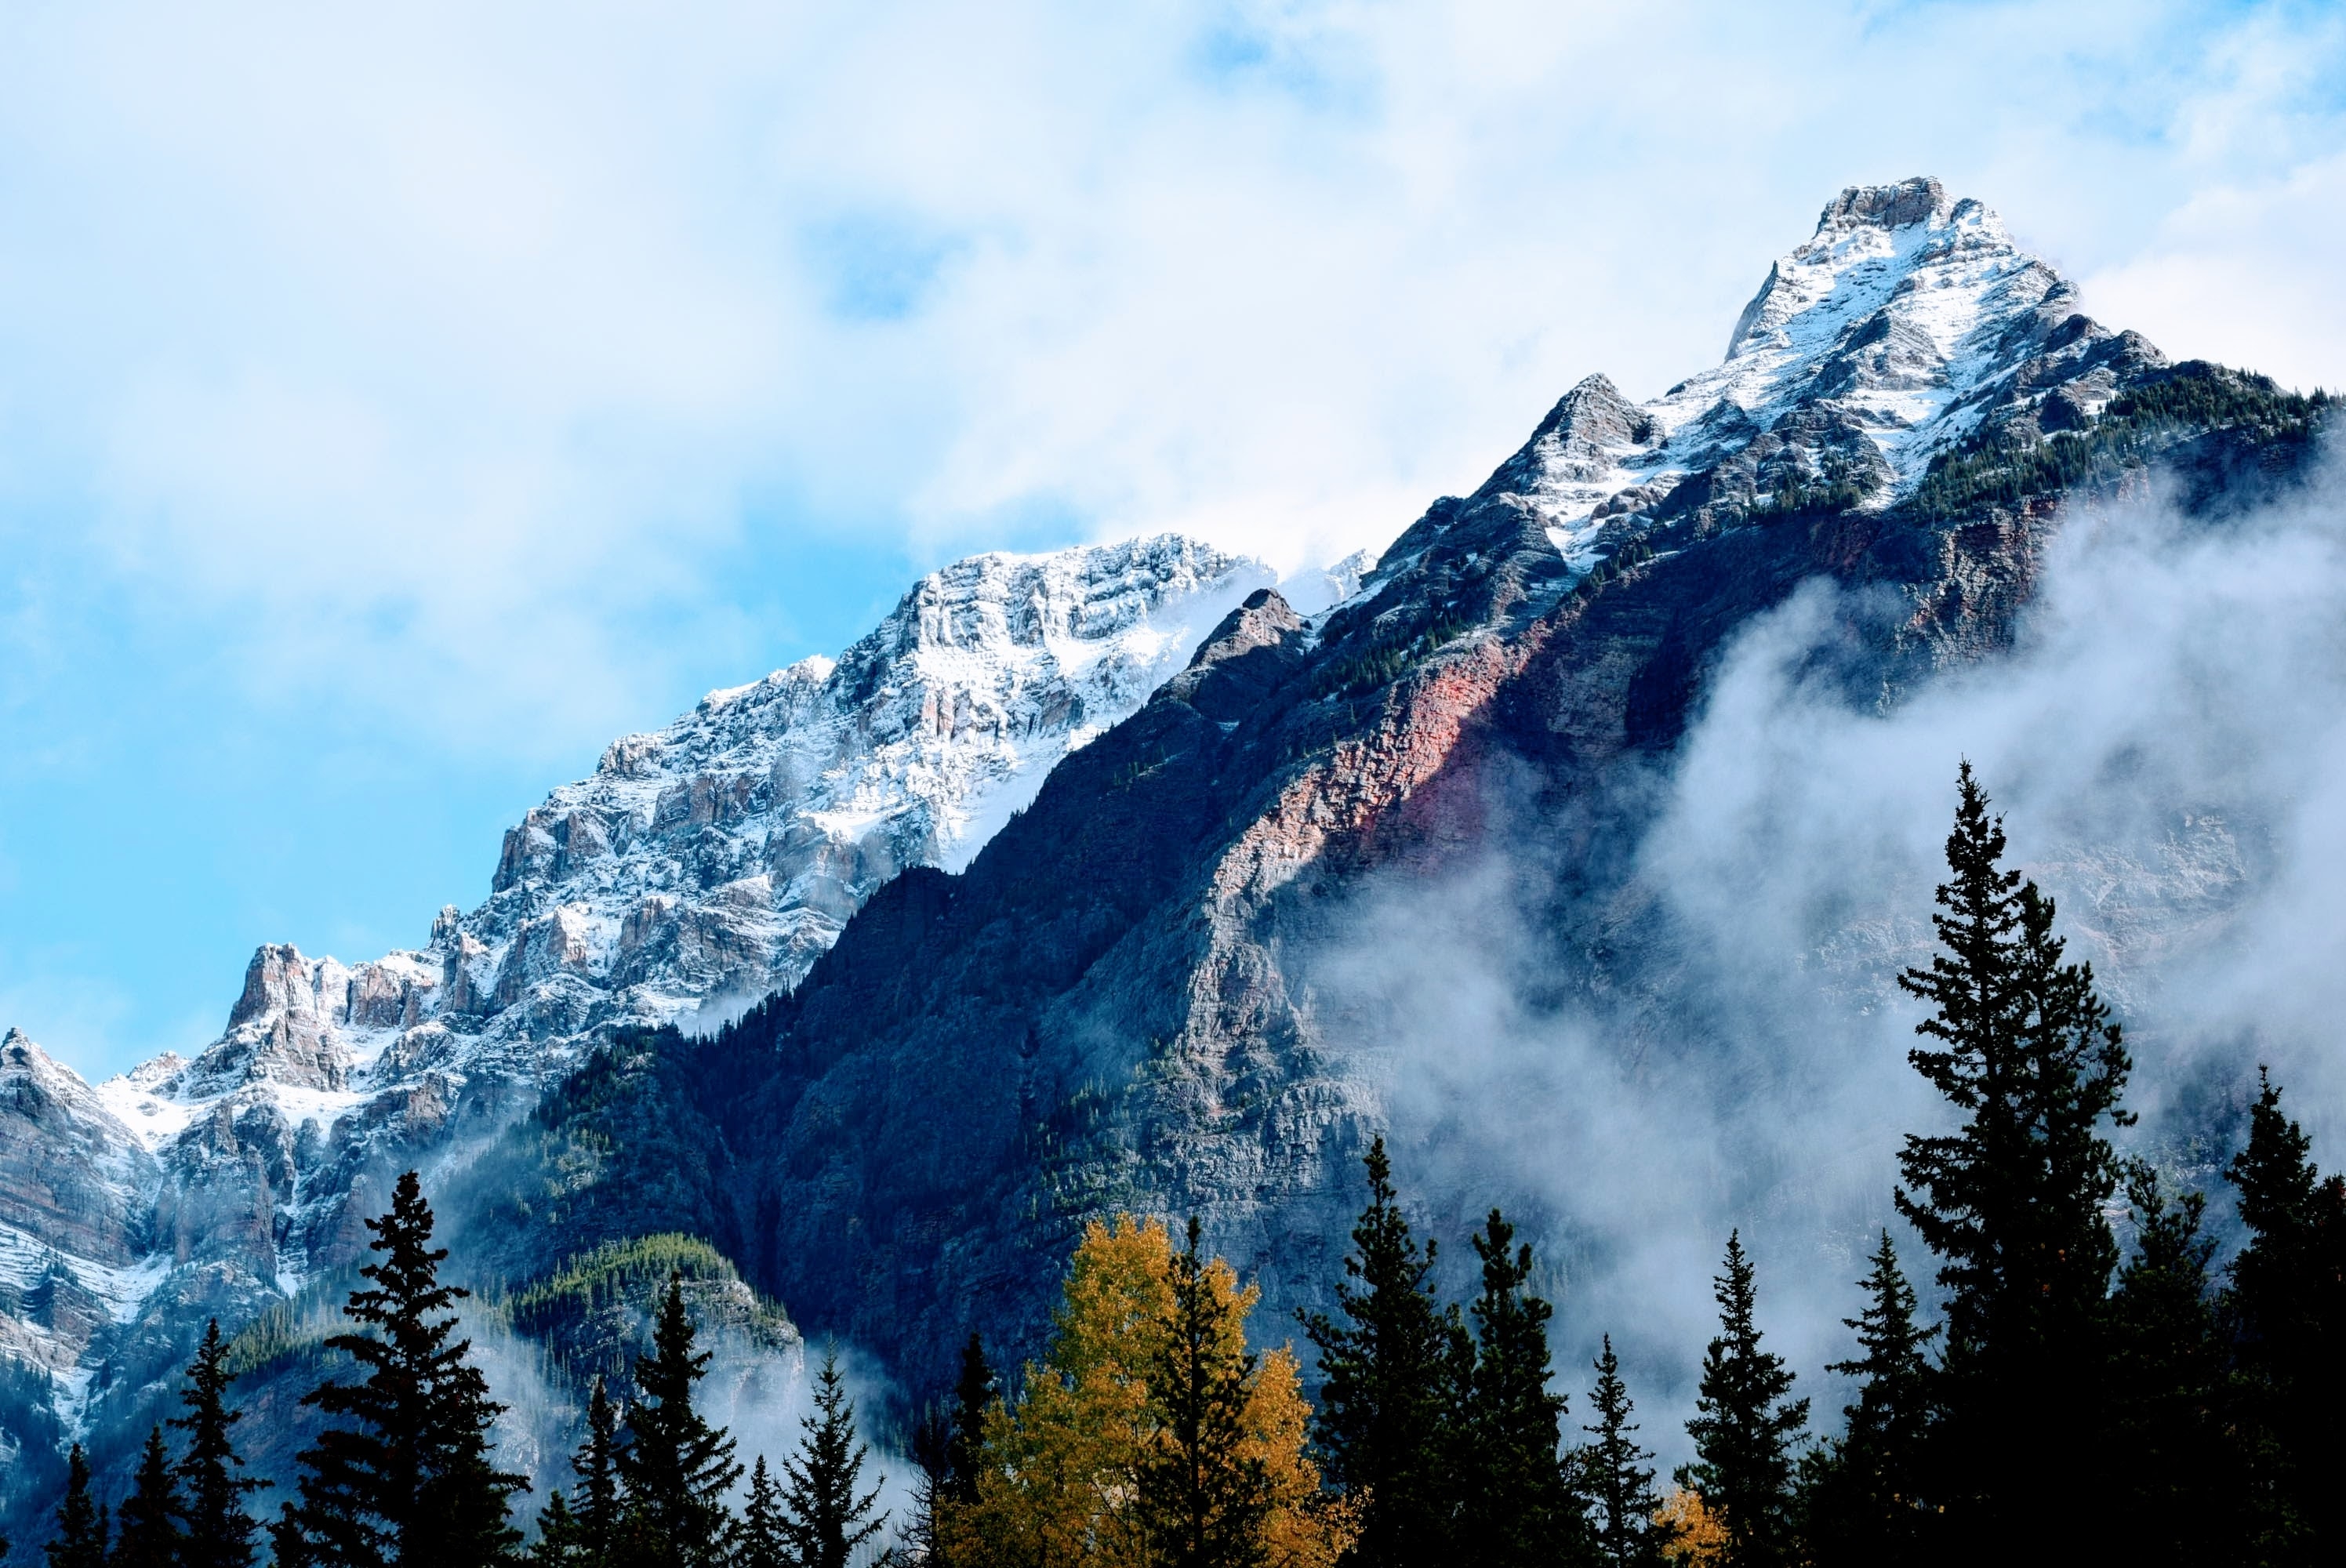 HD wallpaper, Jasper National Park, Jasper, Snowy Mountains, Mountain Range, Landscape, Mountain Peaks, Foggy, Glacier Mountains, Cloudy, Canada